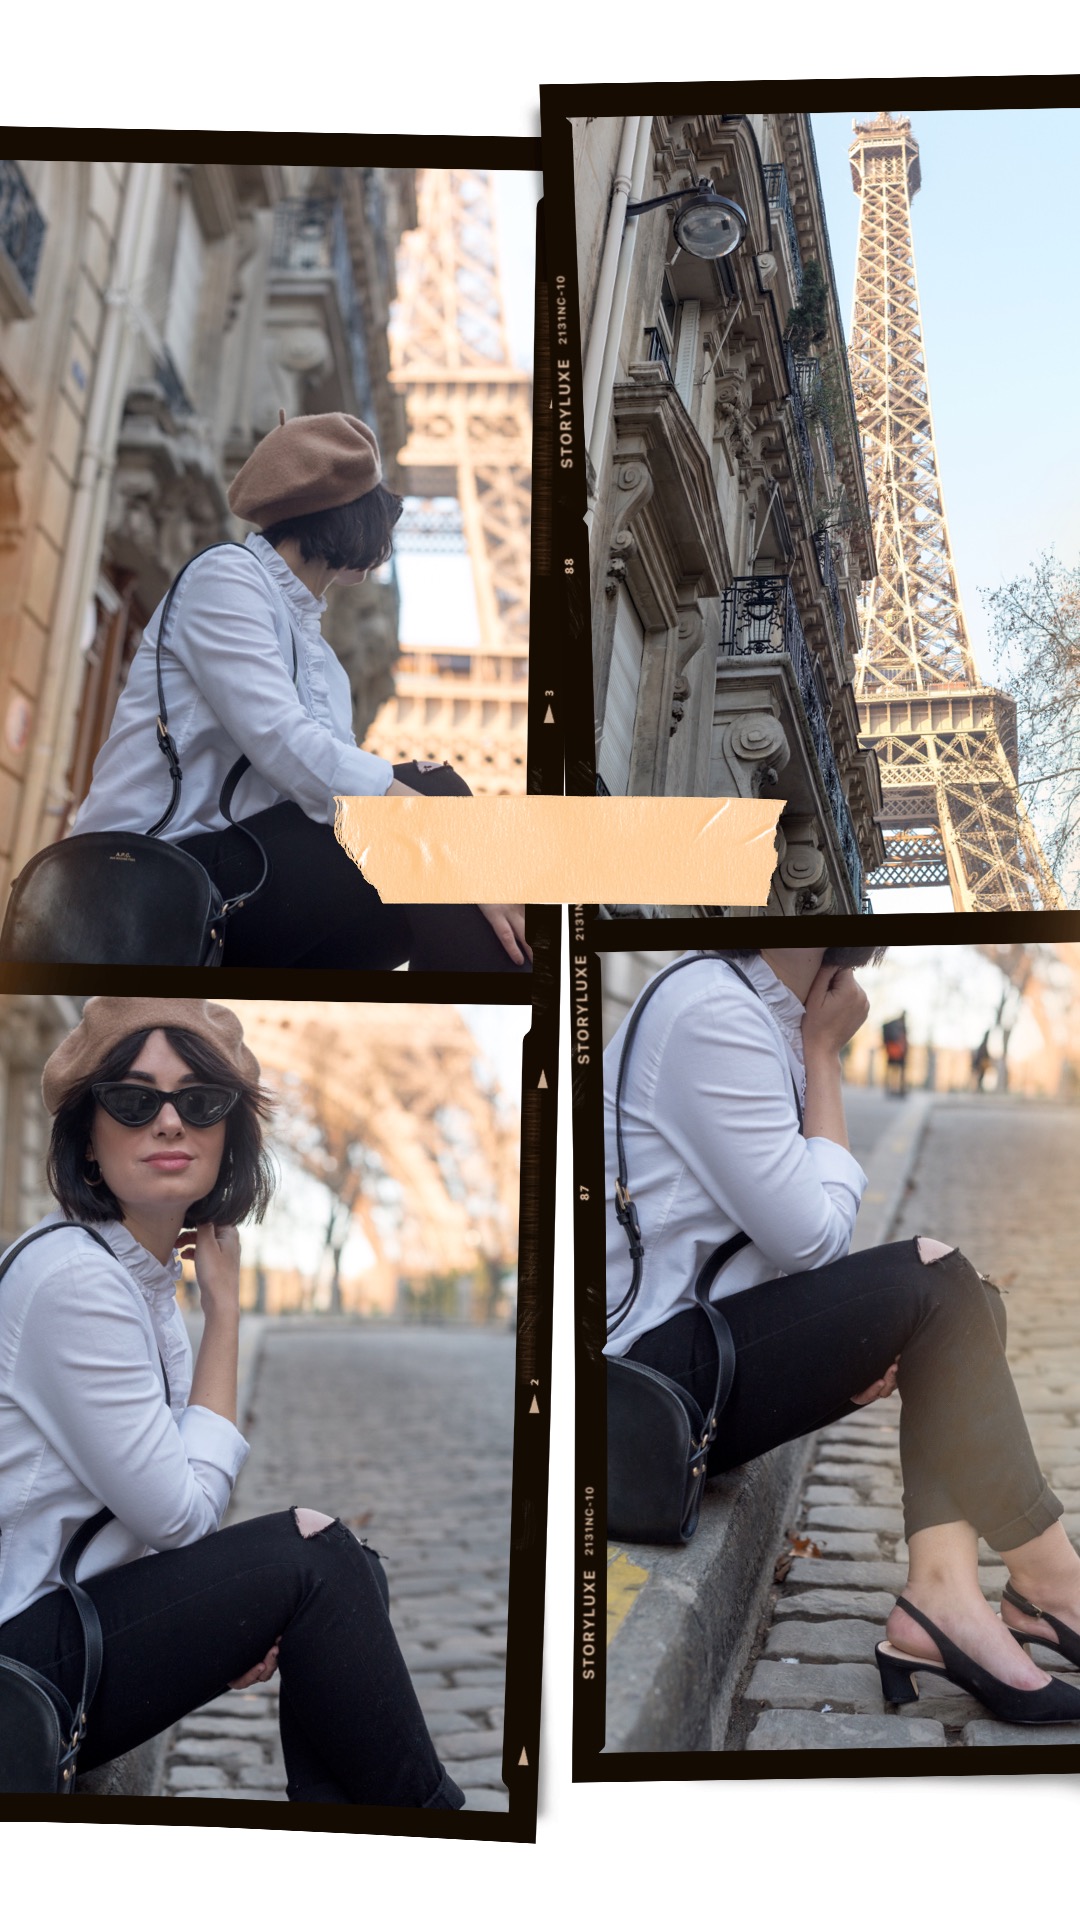 Snapshots of top Canadian fashion blogger Cee Fardoe of Coco & Vera near the Eiffel Tower in Paris, wearing Zara cat eye sunglasses and an APC half-moon bag